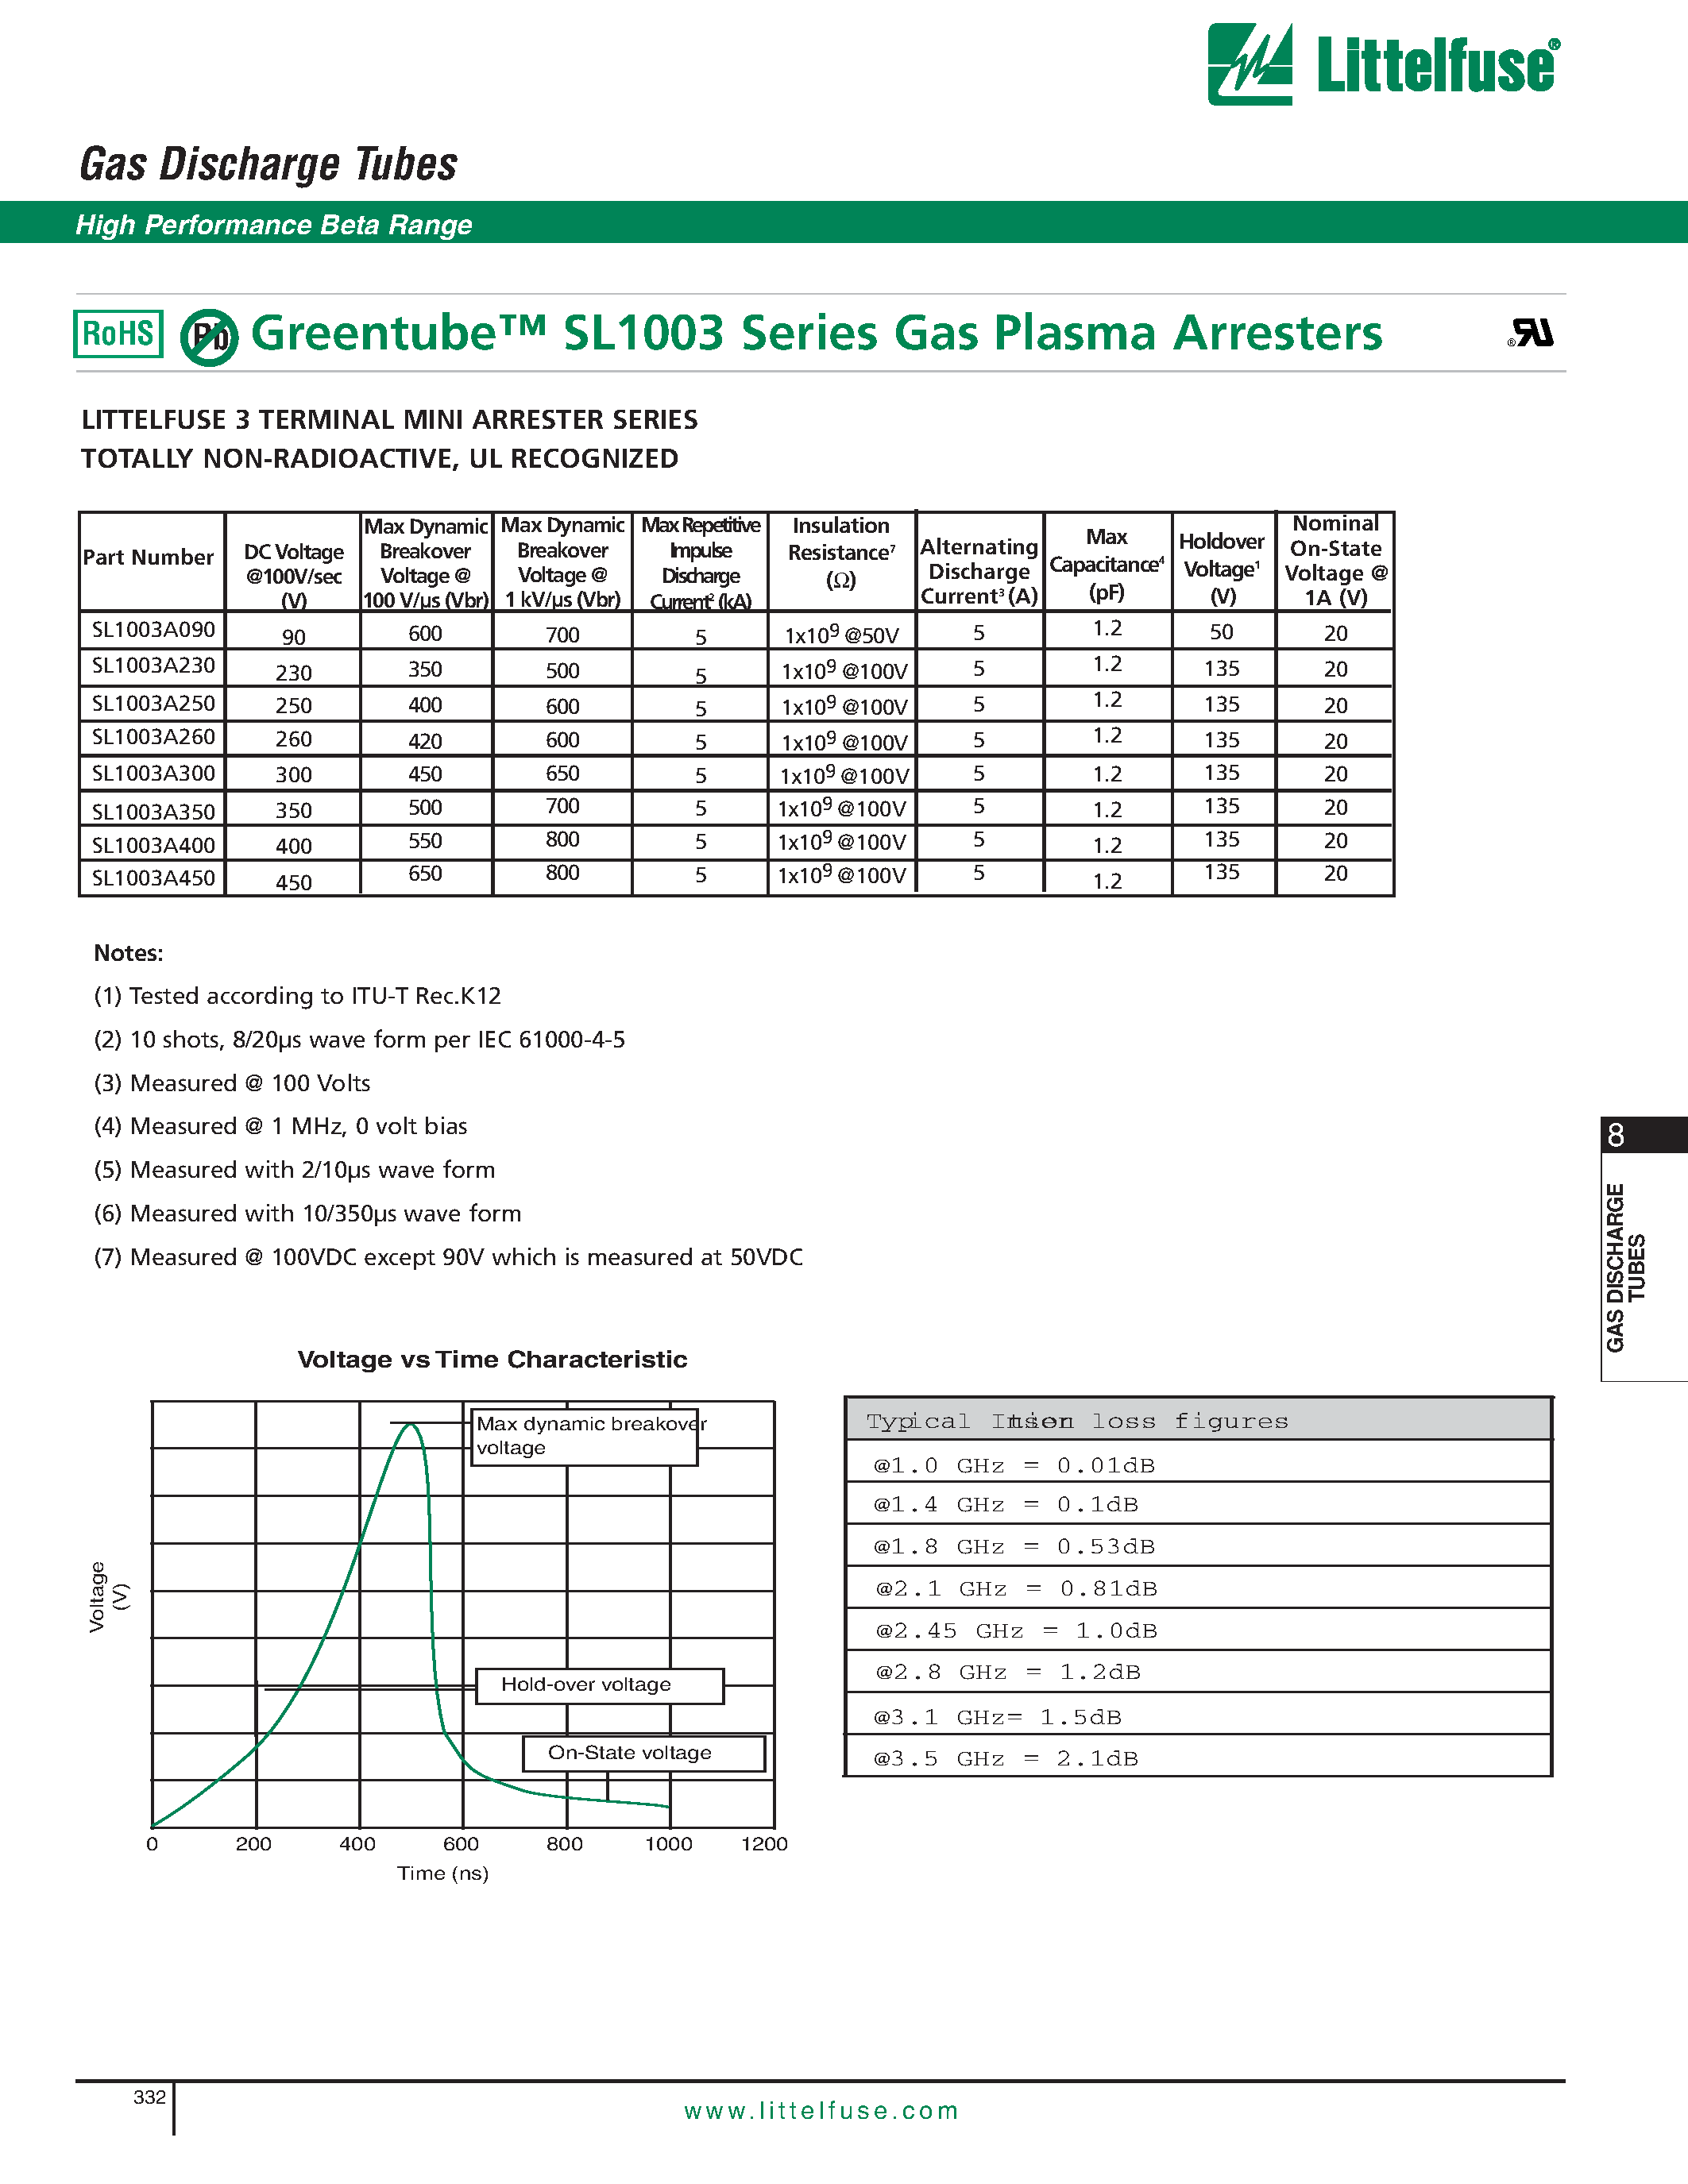 Datasheet SL1003A350 - Greentube SL1003 Series Gas Plasma Arresters page 2